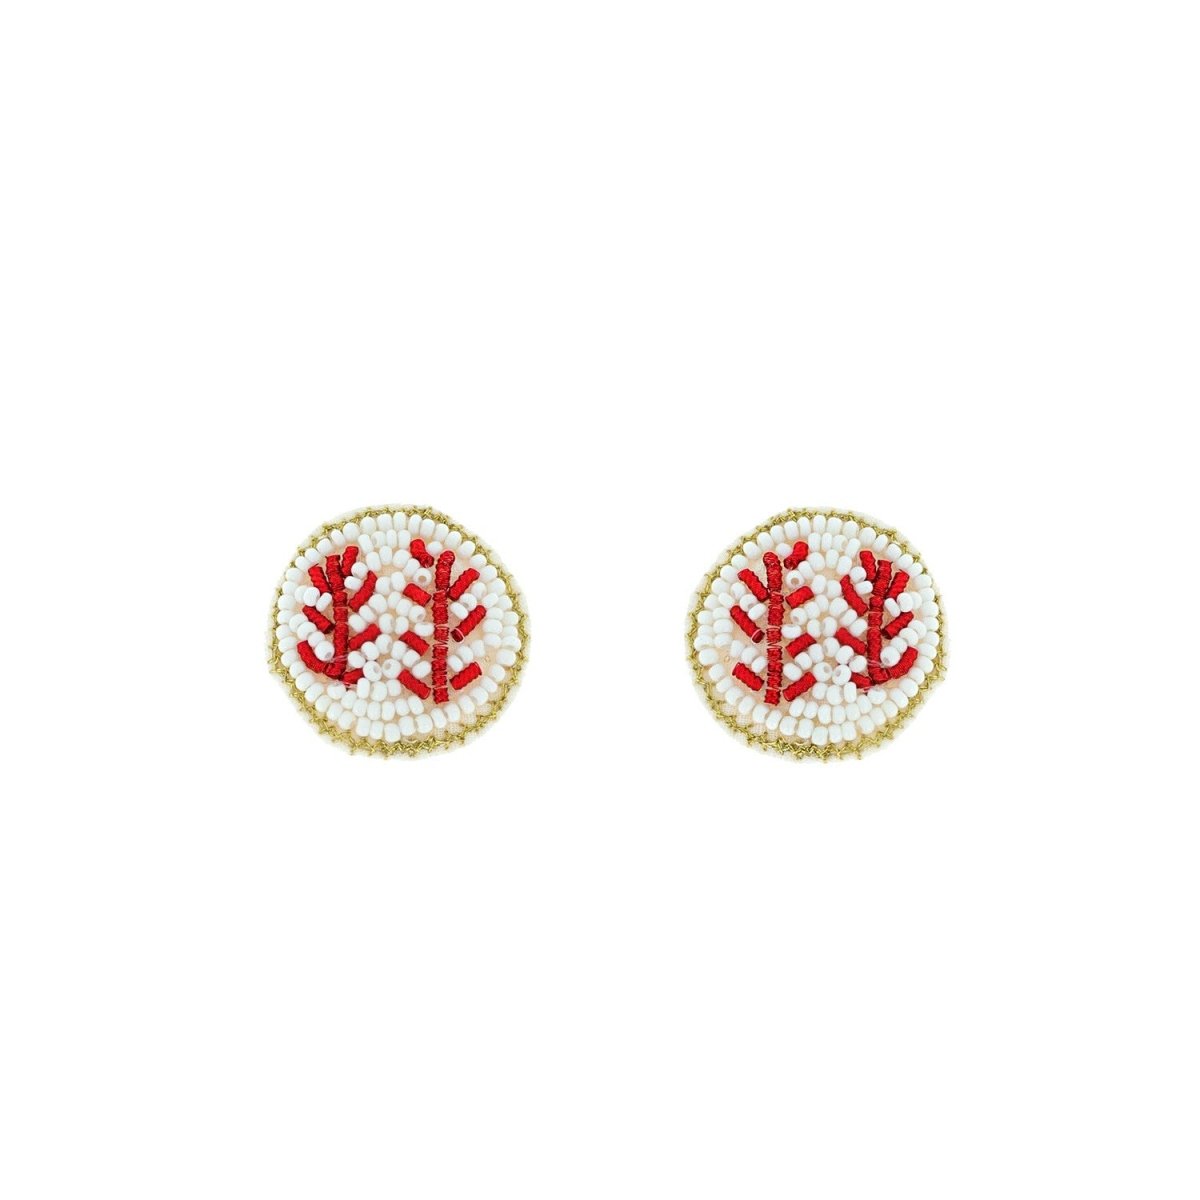 Ball Beaded Embroidery Stud Earrings - earrings - Jimberly's Boutique